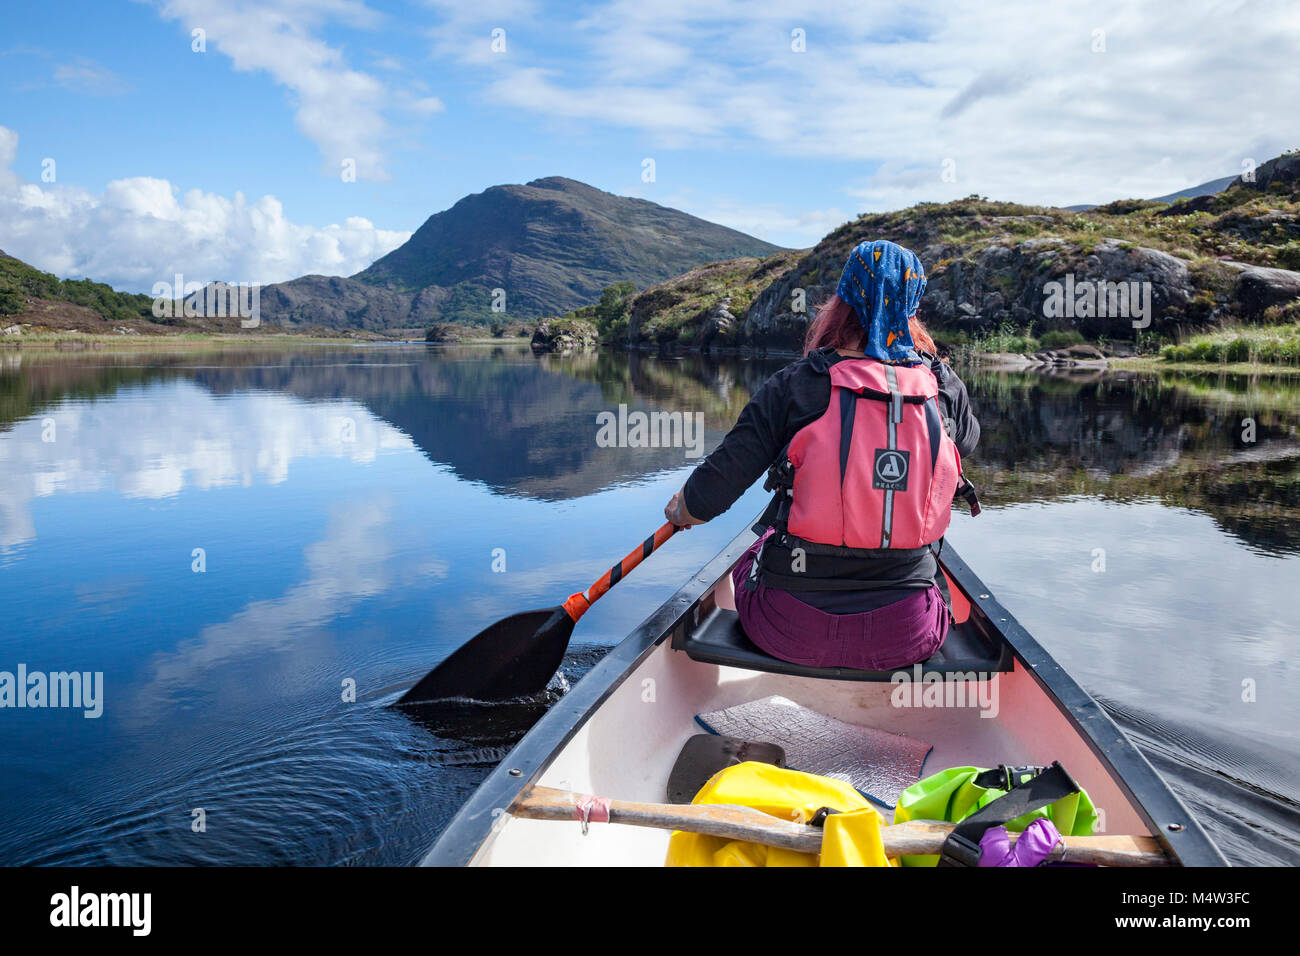 Kanufahren auf dem Oberen Lough, Killarney Seen, Nationalpark Killarney, County Kerry, Irland. Stockfoto